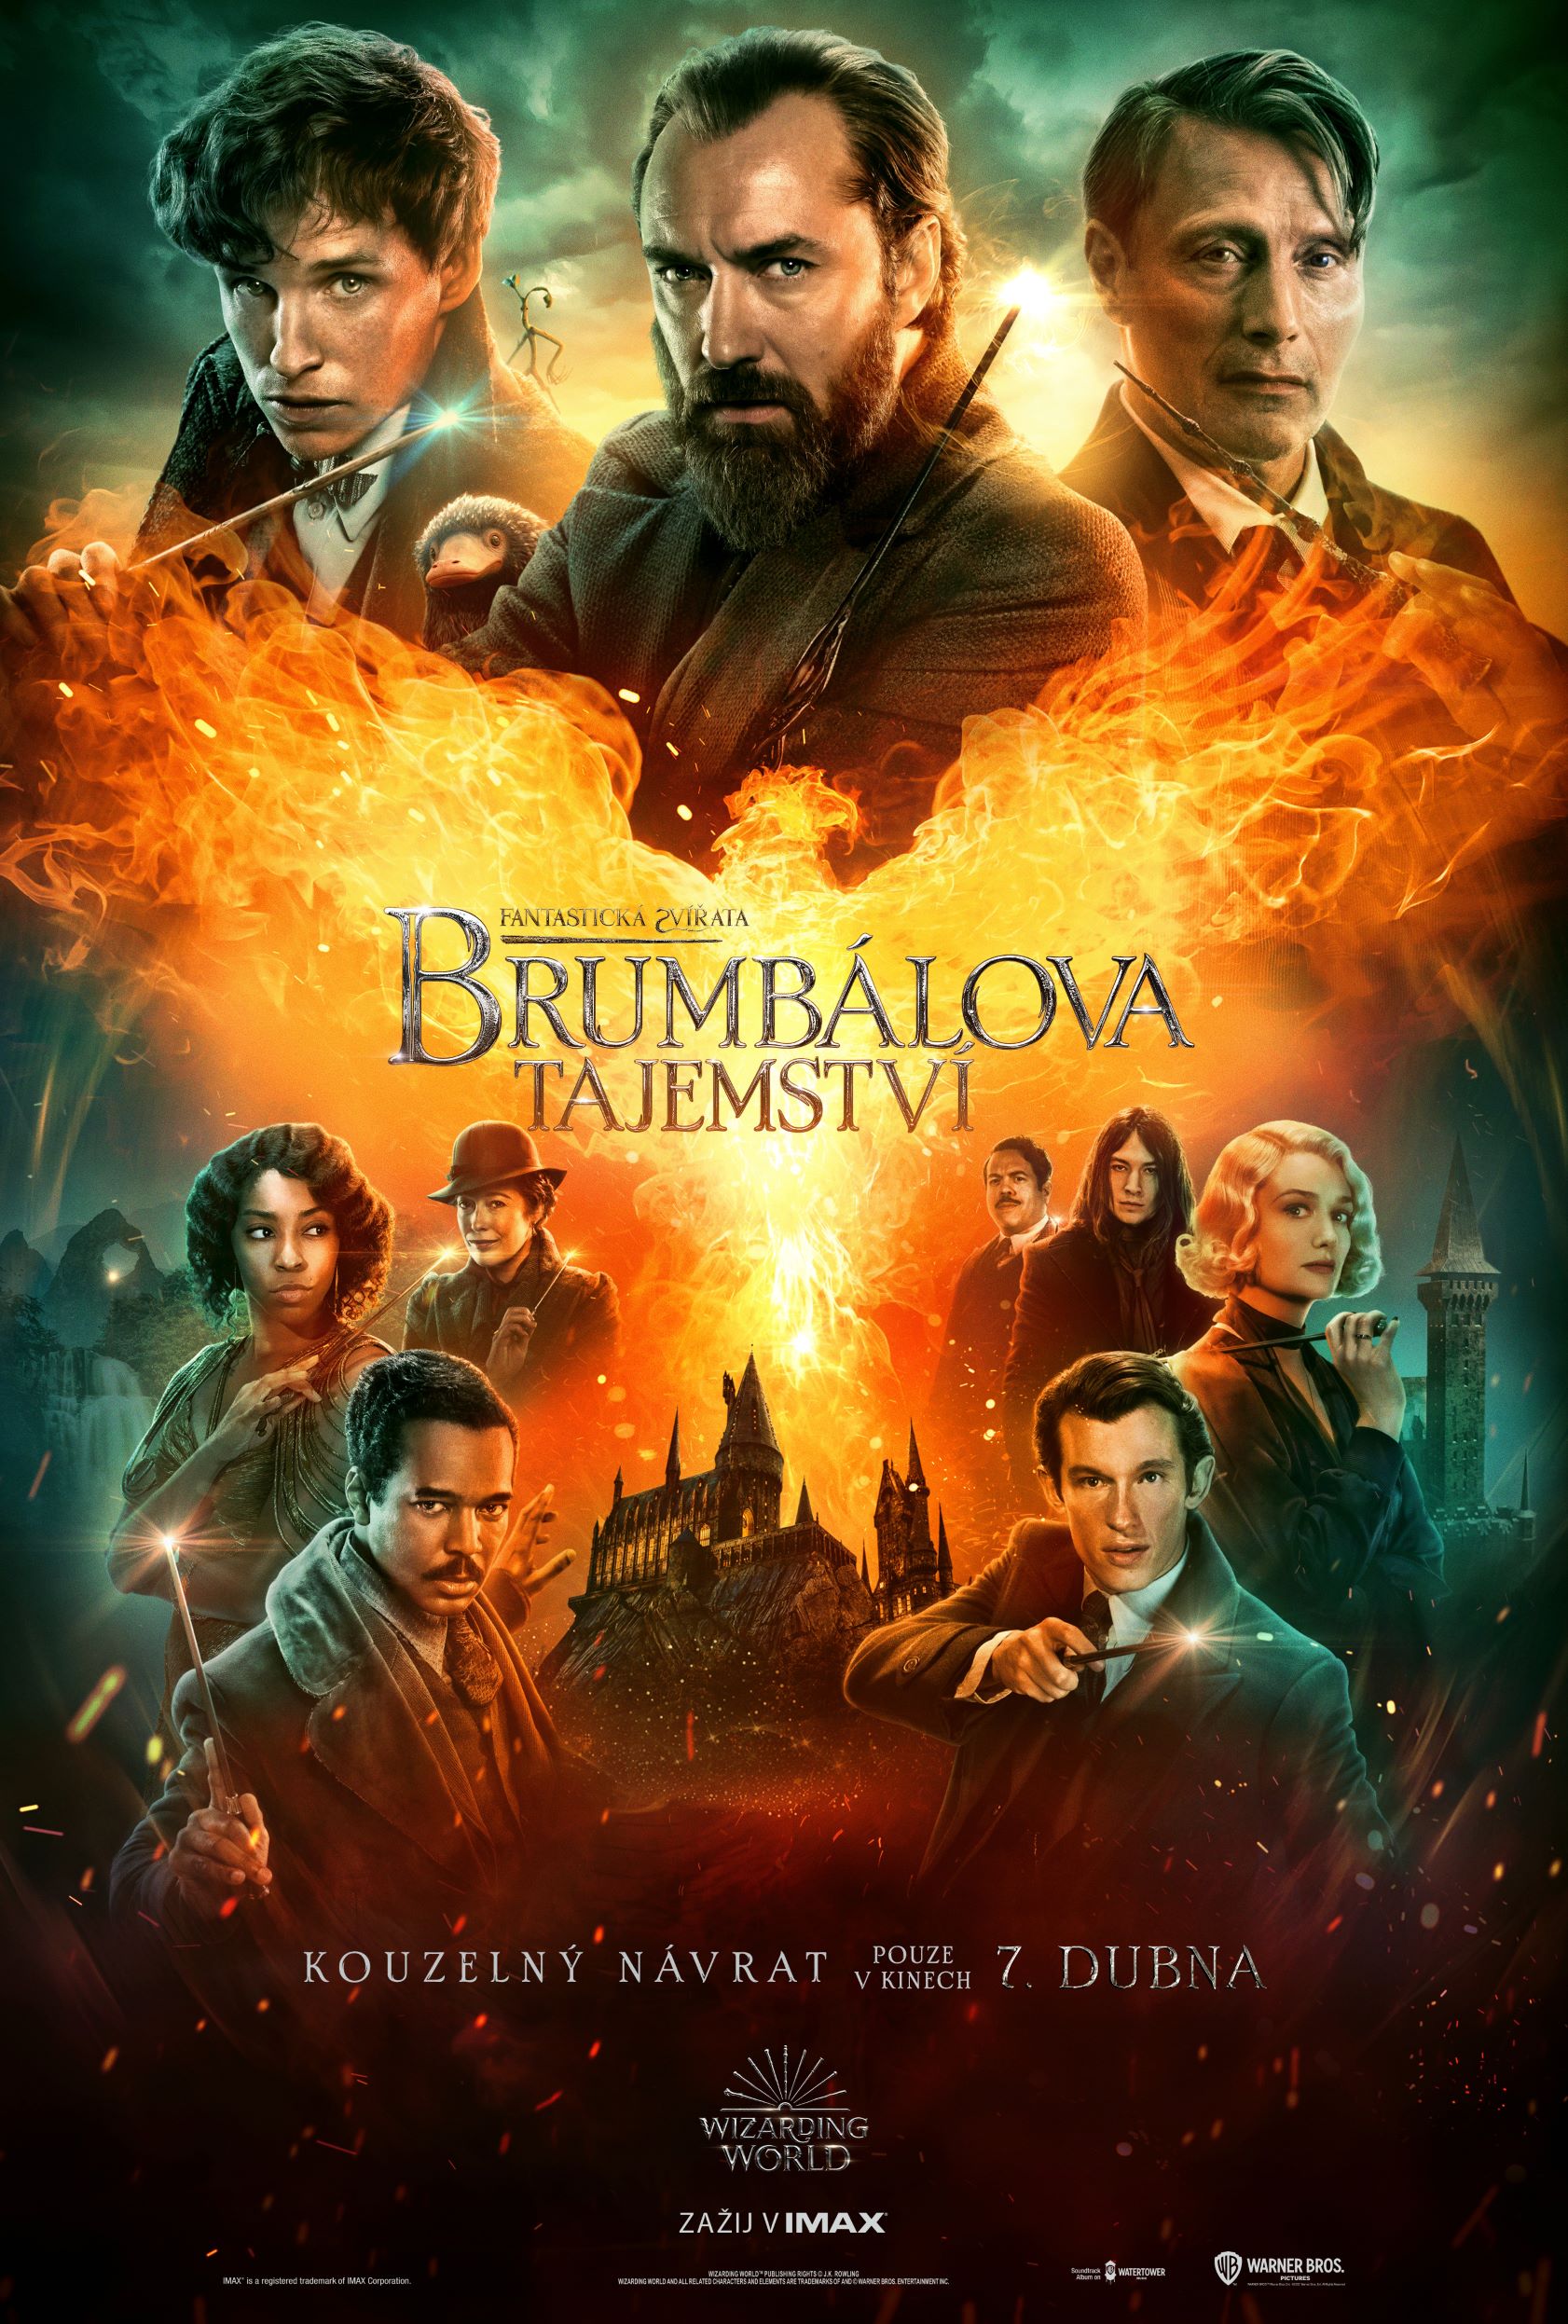 Stiahni si Filmy CZ/SK dabing Fantasticka zvirata: Brumbalova tajemstvi / Fantastic Beasts: The Secrets of Dumbledore (2022) BluRay.CZ.EN.SK.1080p = CSFD 56%